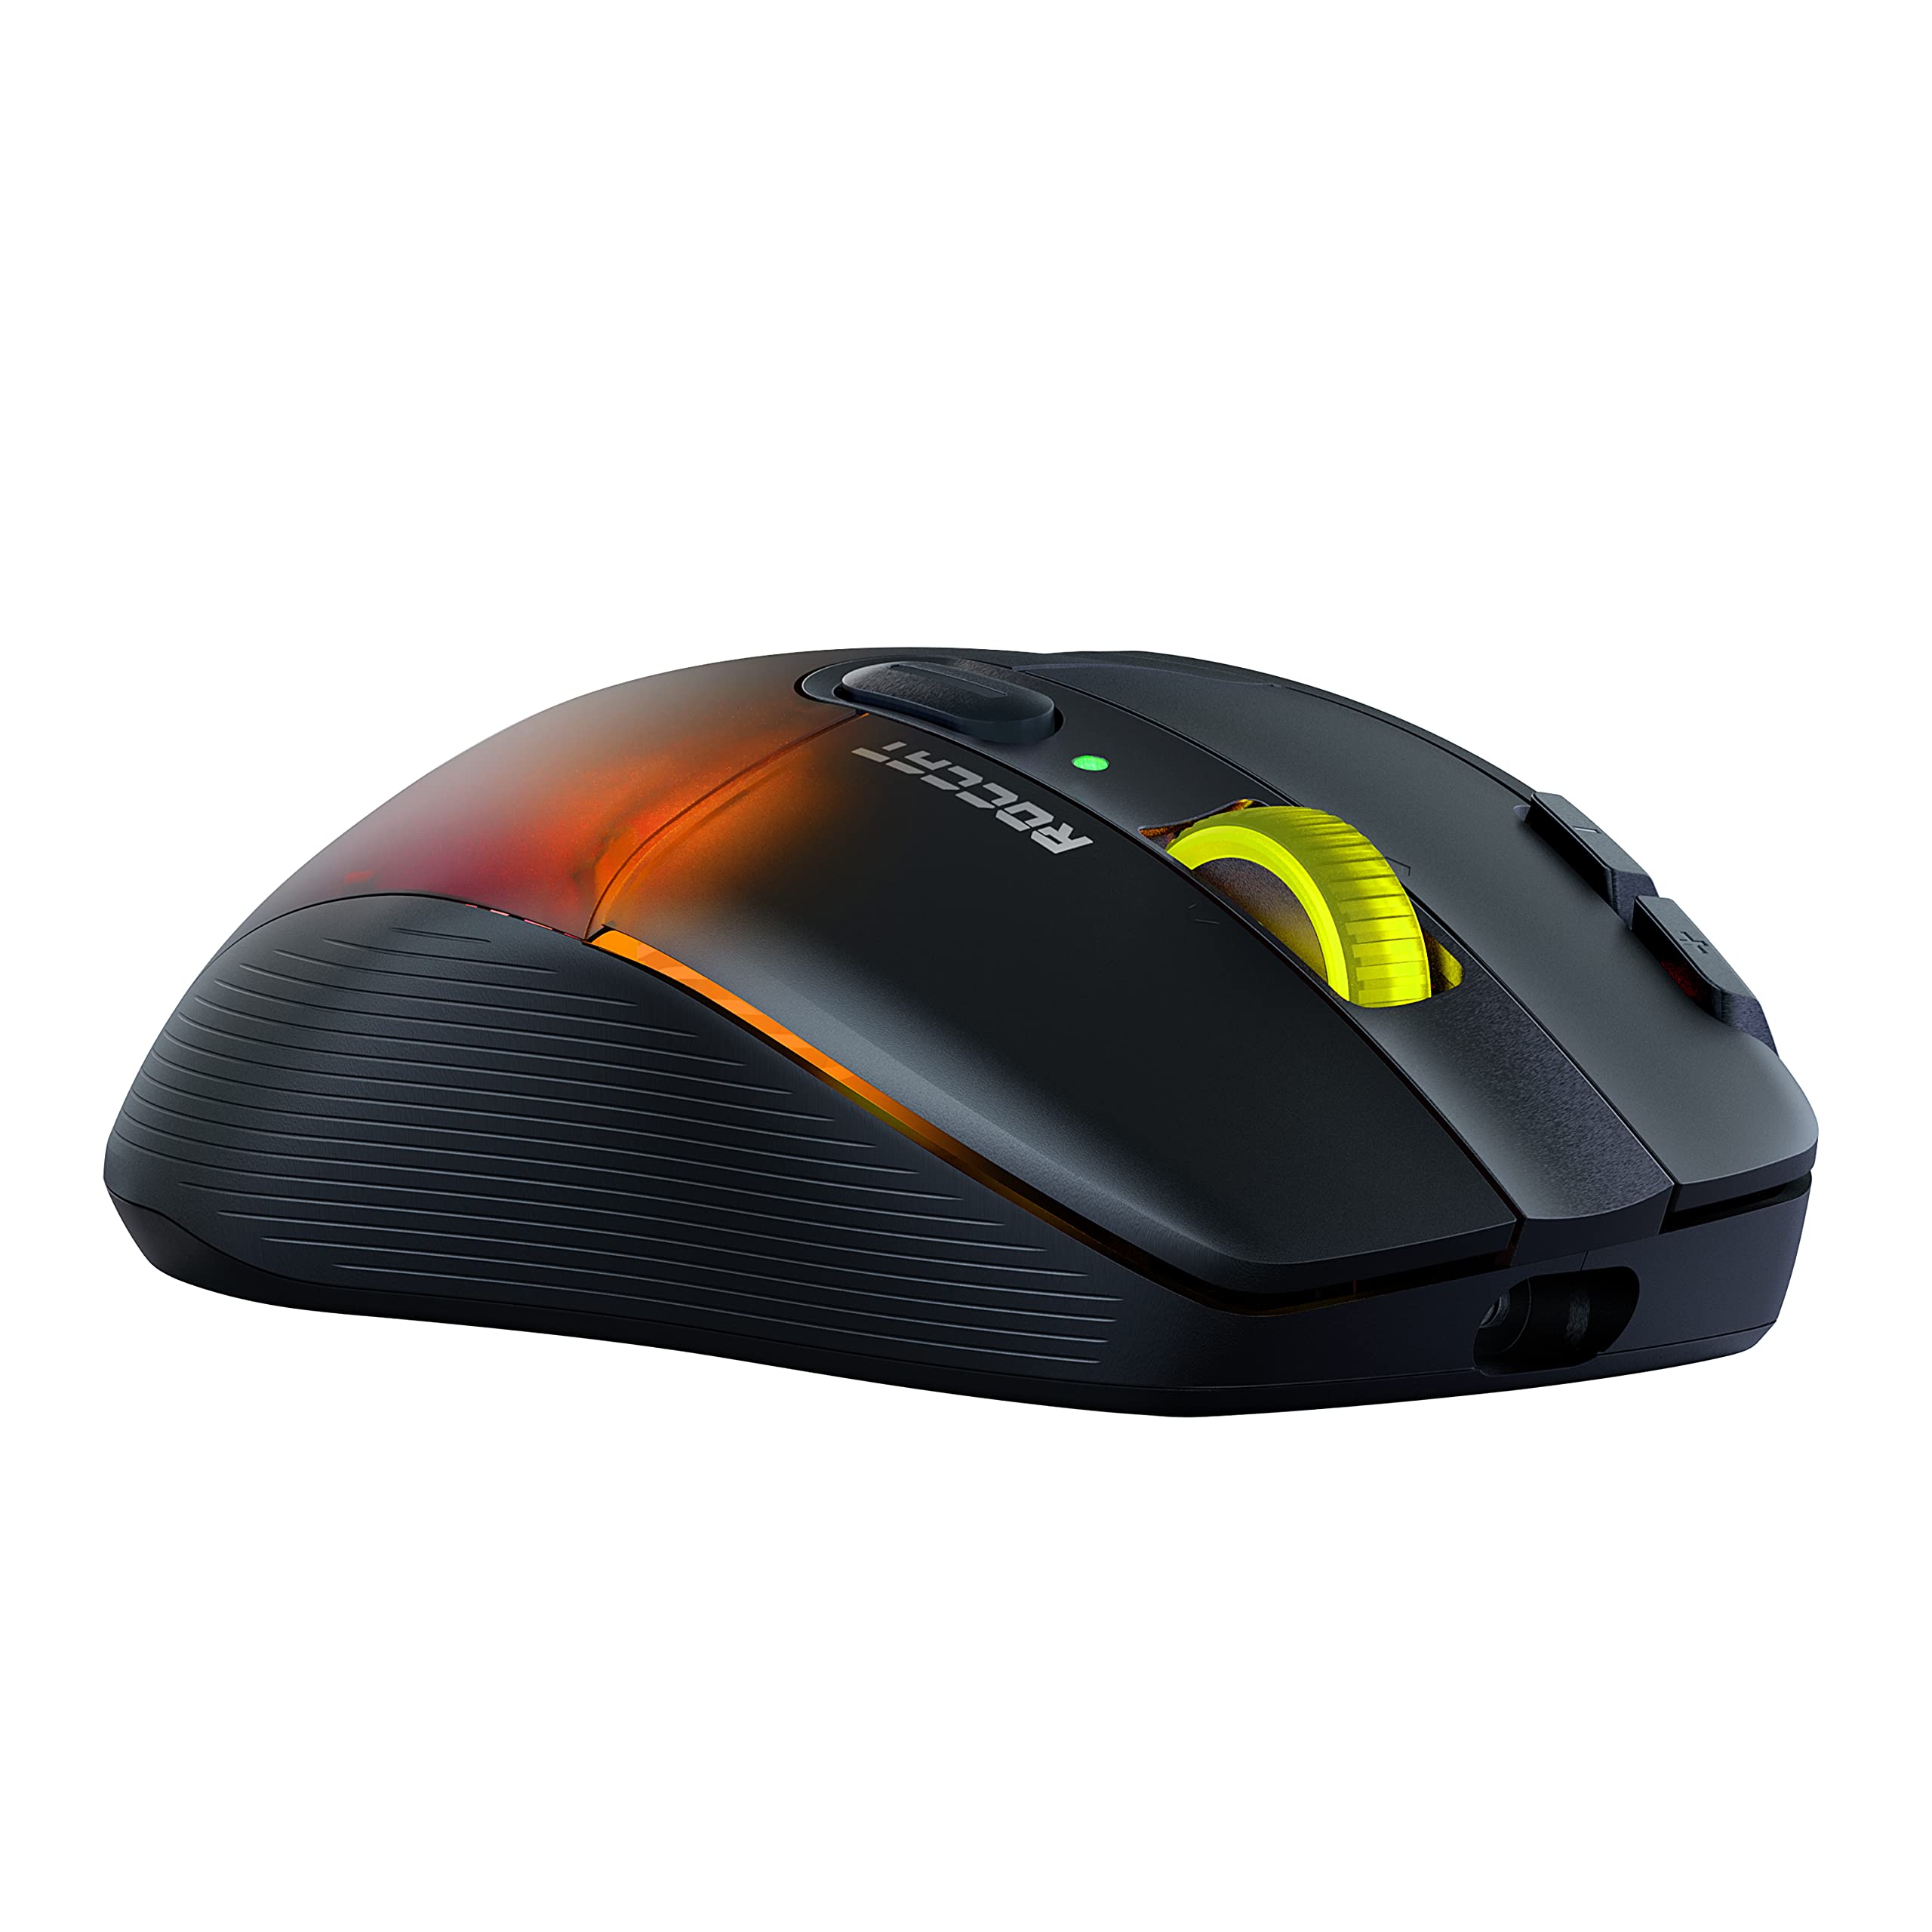 ROCCAT Kone XP Air – Wireless Customizable Ergonomic RGB Gaming Mouse, 19K DPI Optical Sensor, 100-hour Battery & Charging Dock, 29 Programmable Inputs & AIMO RGB Lighting, 4D Wheel – Black